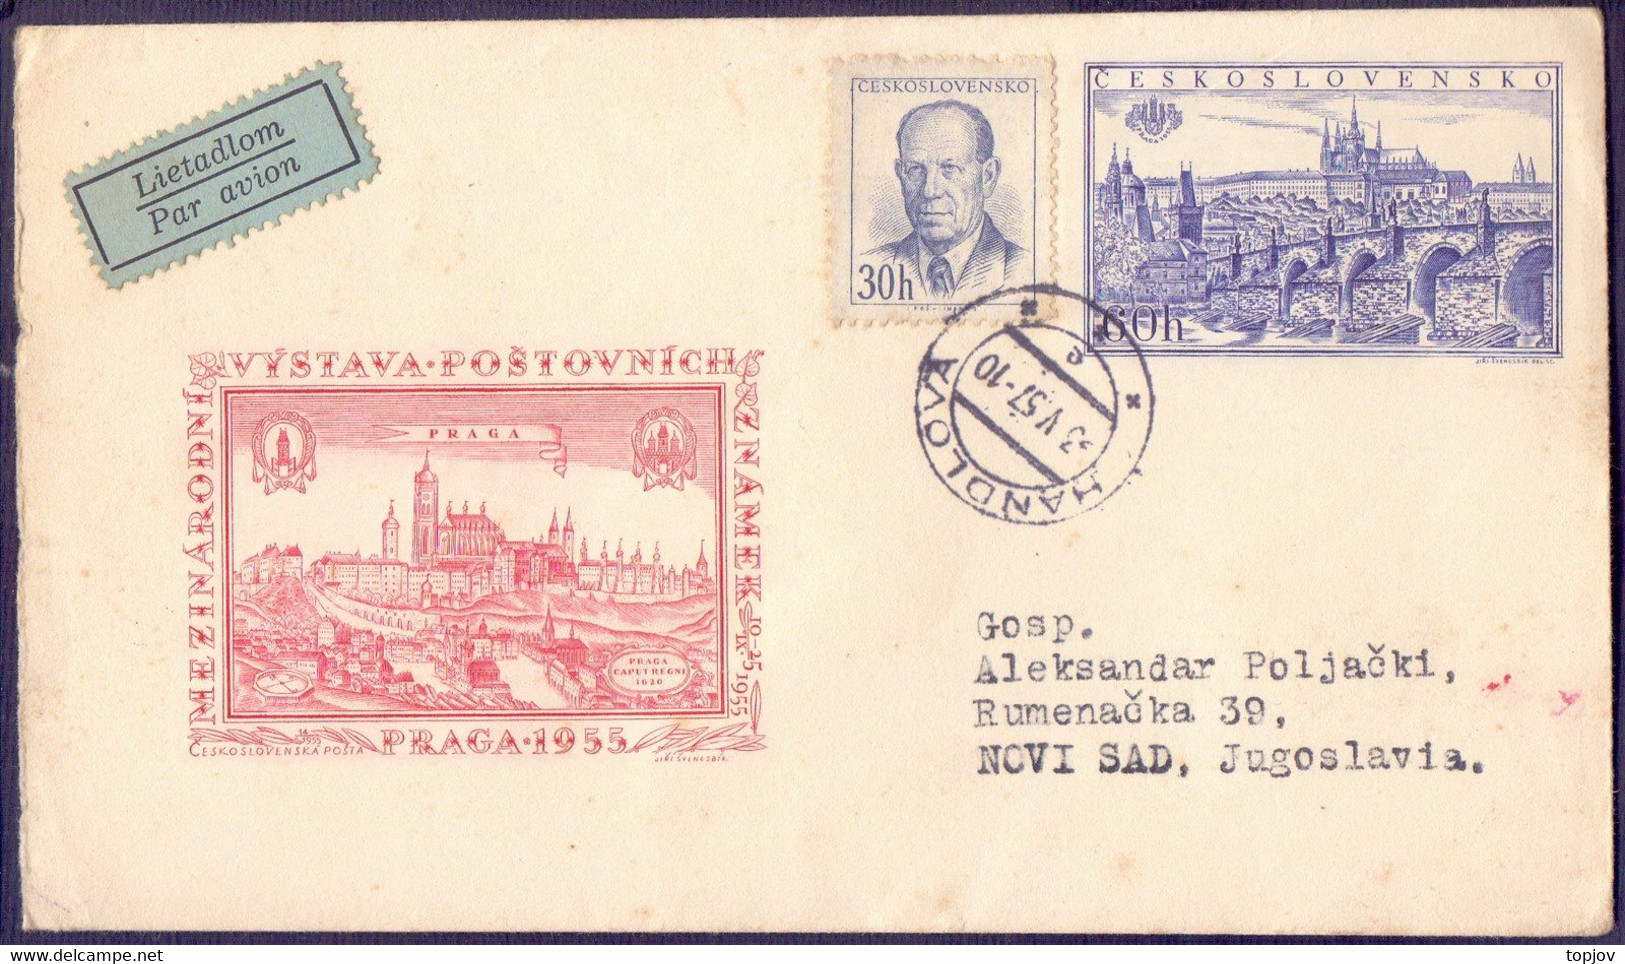 CZECHOSLOVAKIA - PRAGA - BRIDGE - 1957 - Sobres